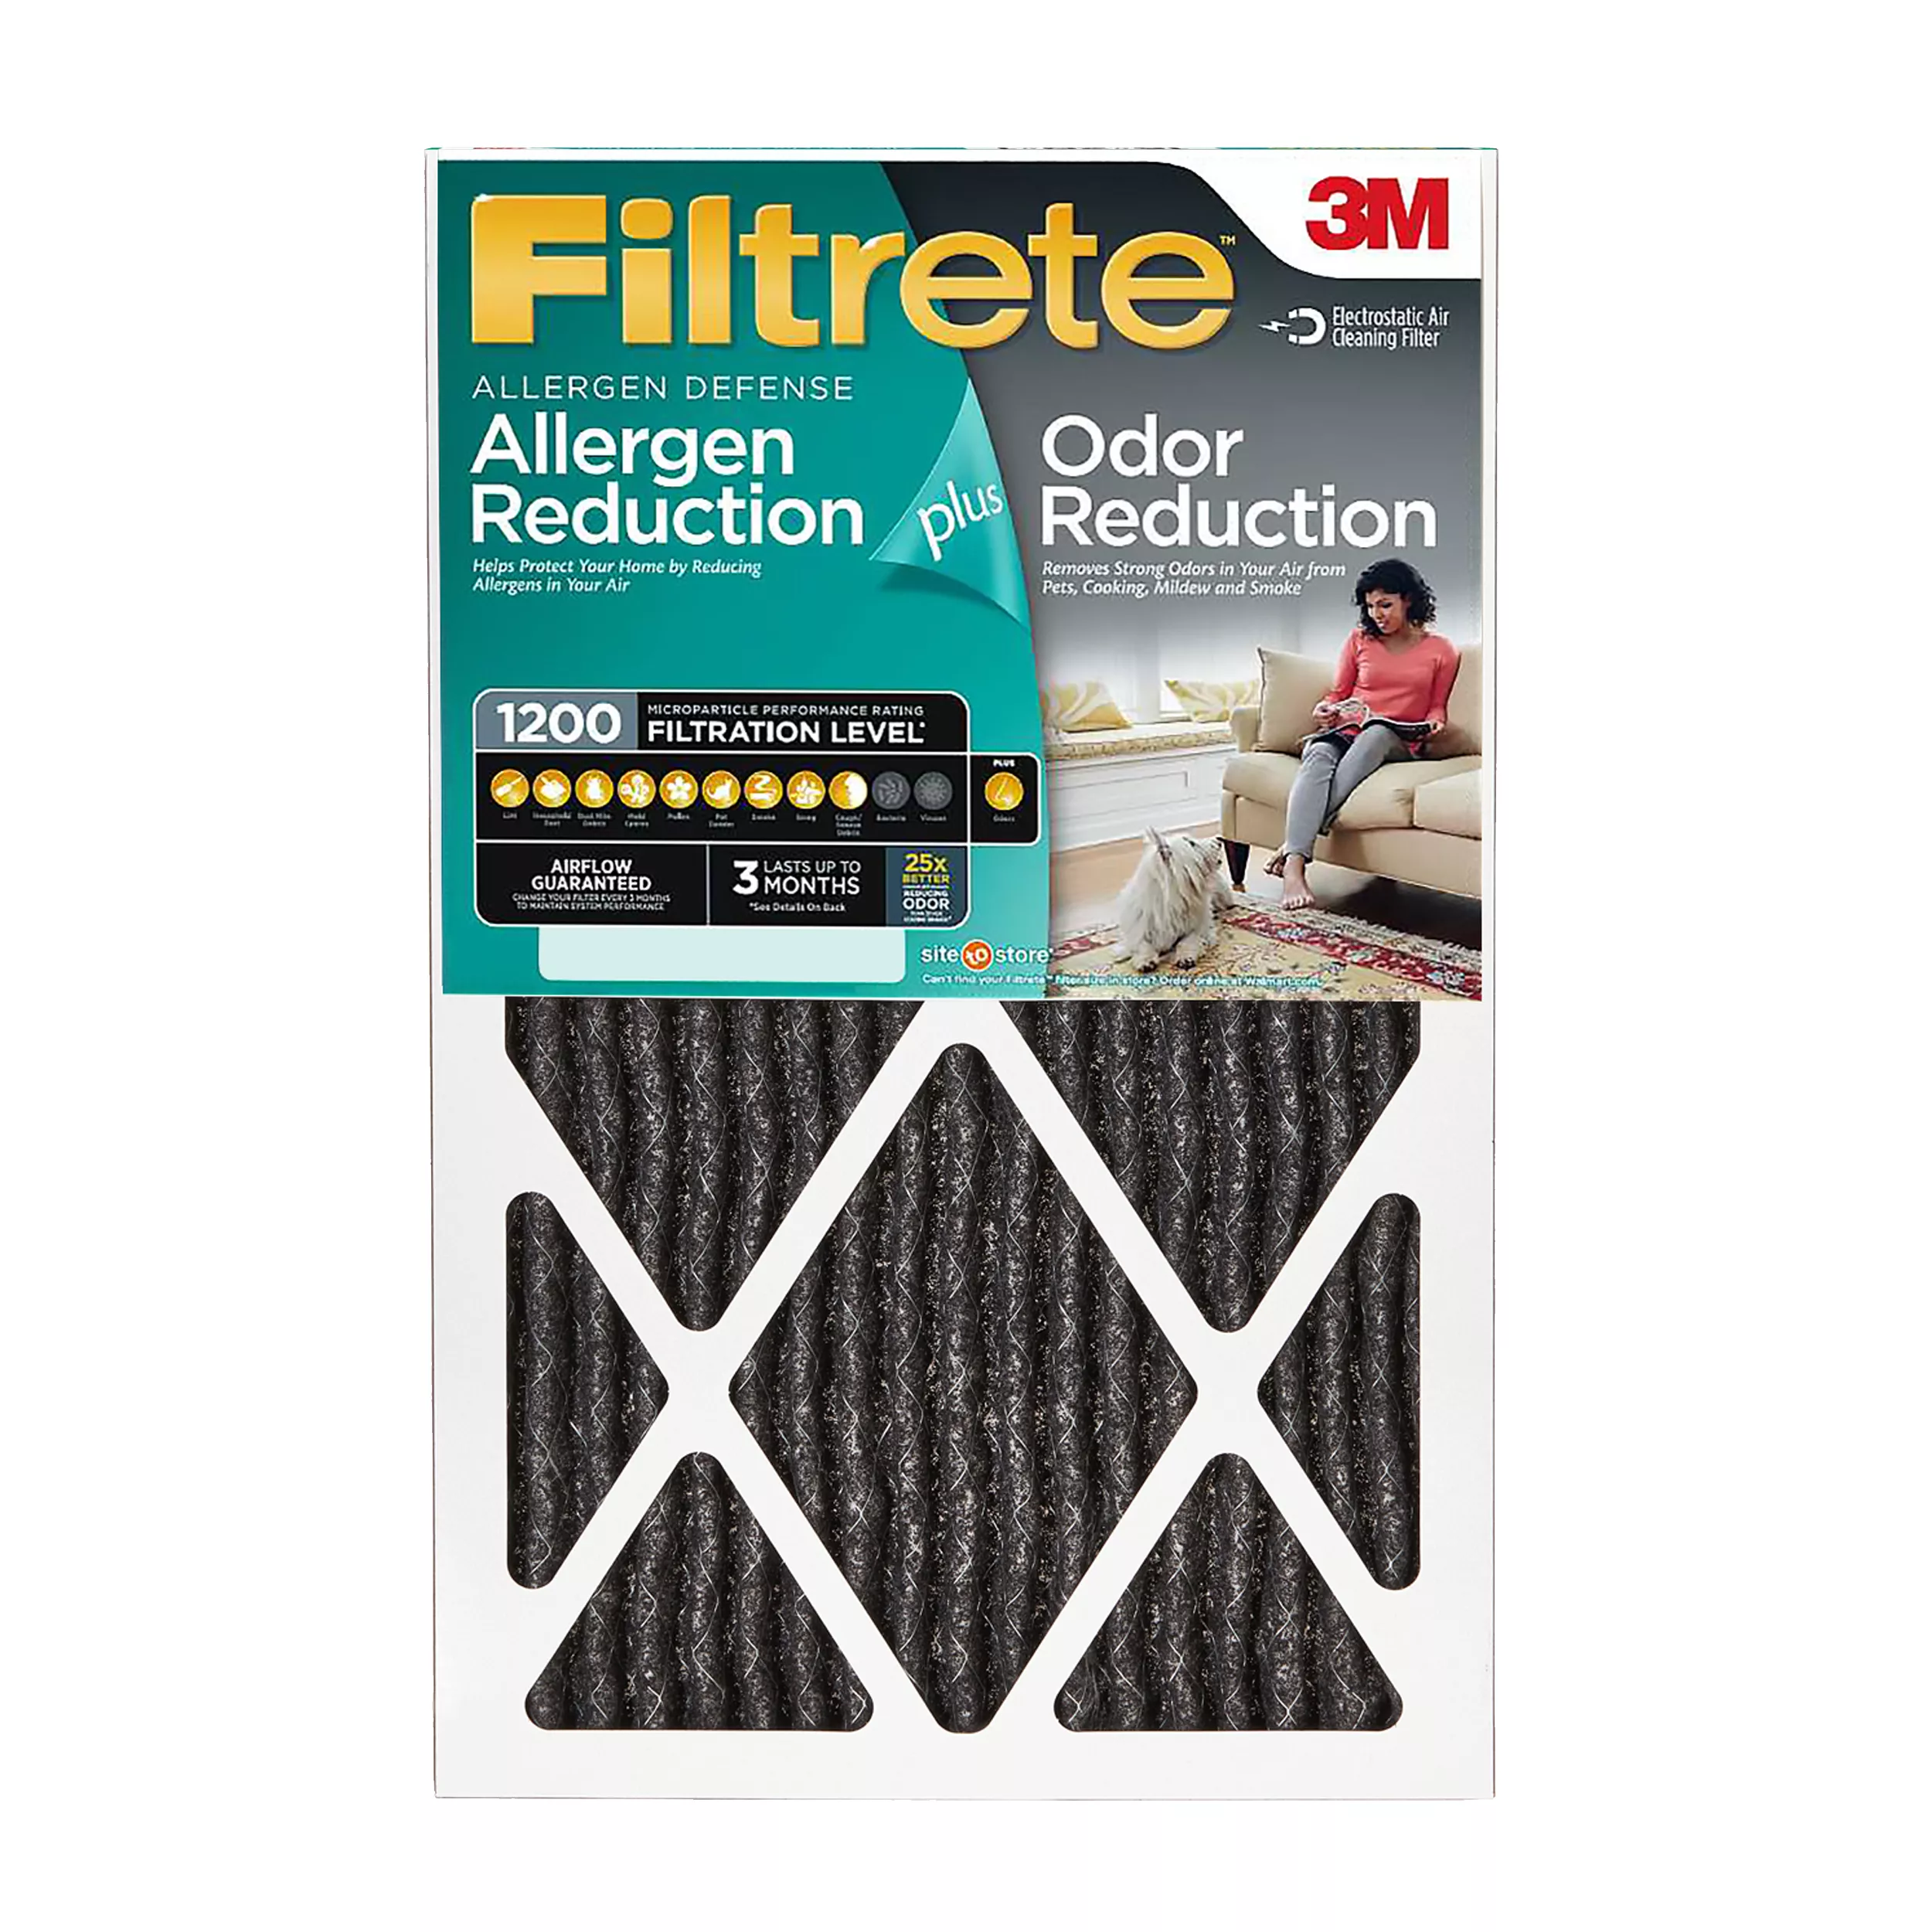 Filtrete™ Home Odor Reduction Filter HOME03-4, 20 in x 25 in x 1 in
(50,8 cm x 63,5 cm x 2,5 cm)